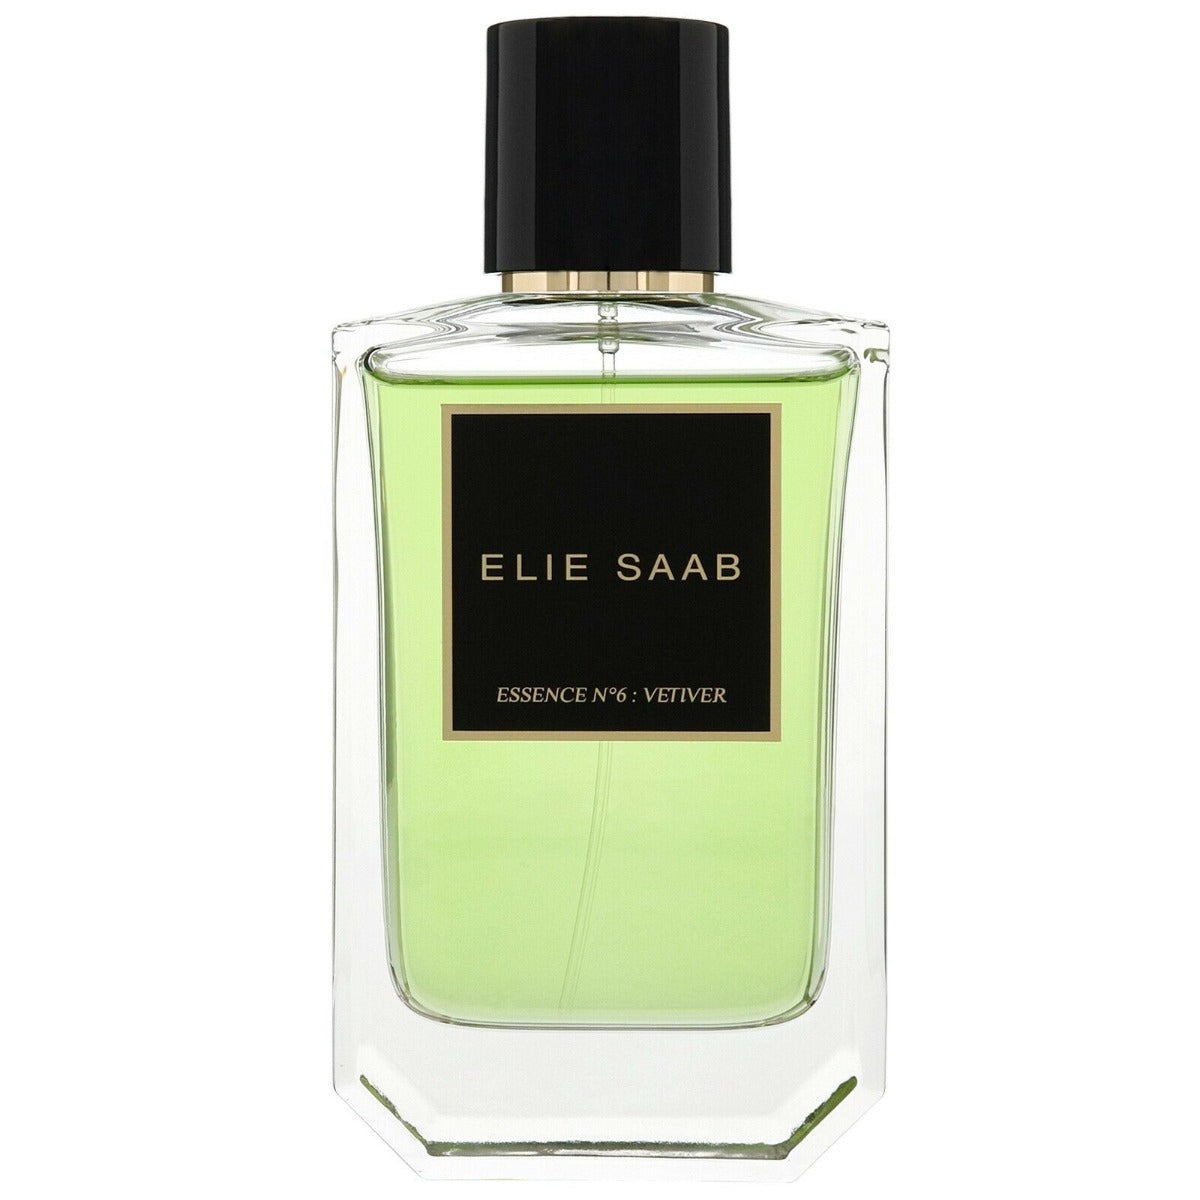 ELIE SAAB ESSENCE NO.6 VETIVER ESSENCE DE PARFUM FOR UNISEX 100 ml - samawa perfumes 